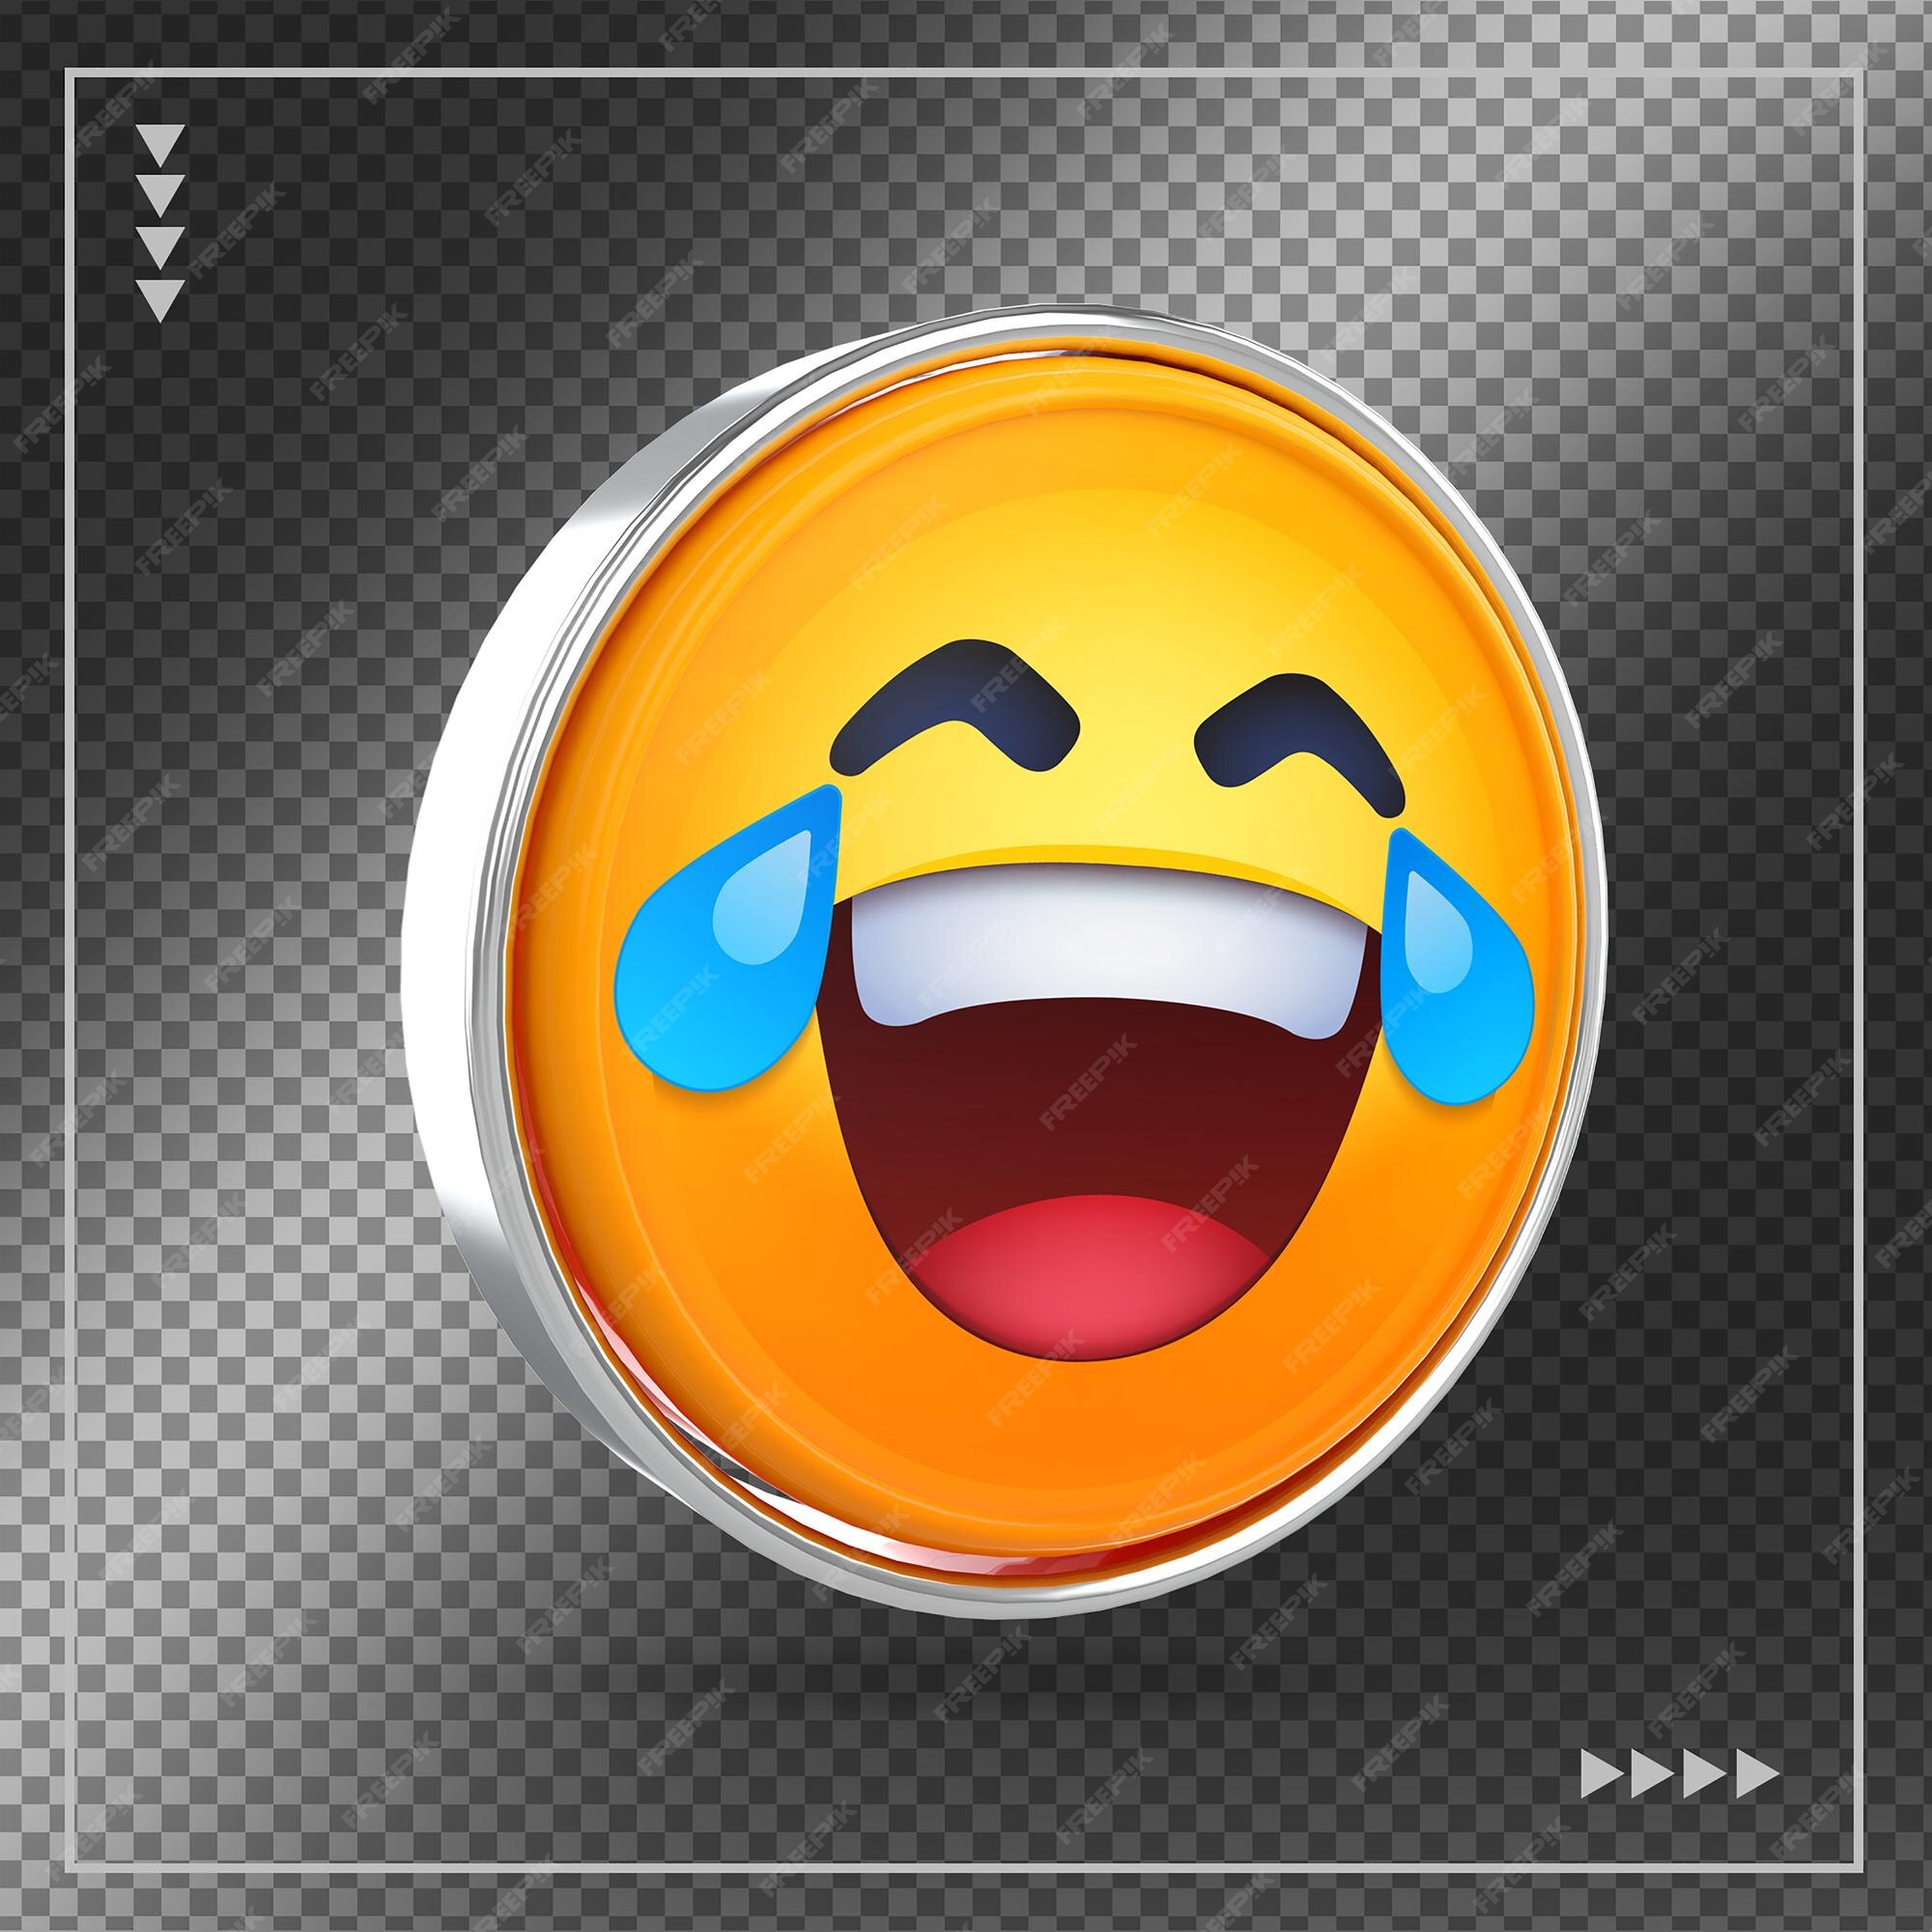 Premium PSD | Emoticon reaction face styles